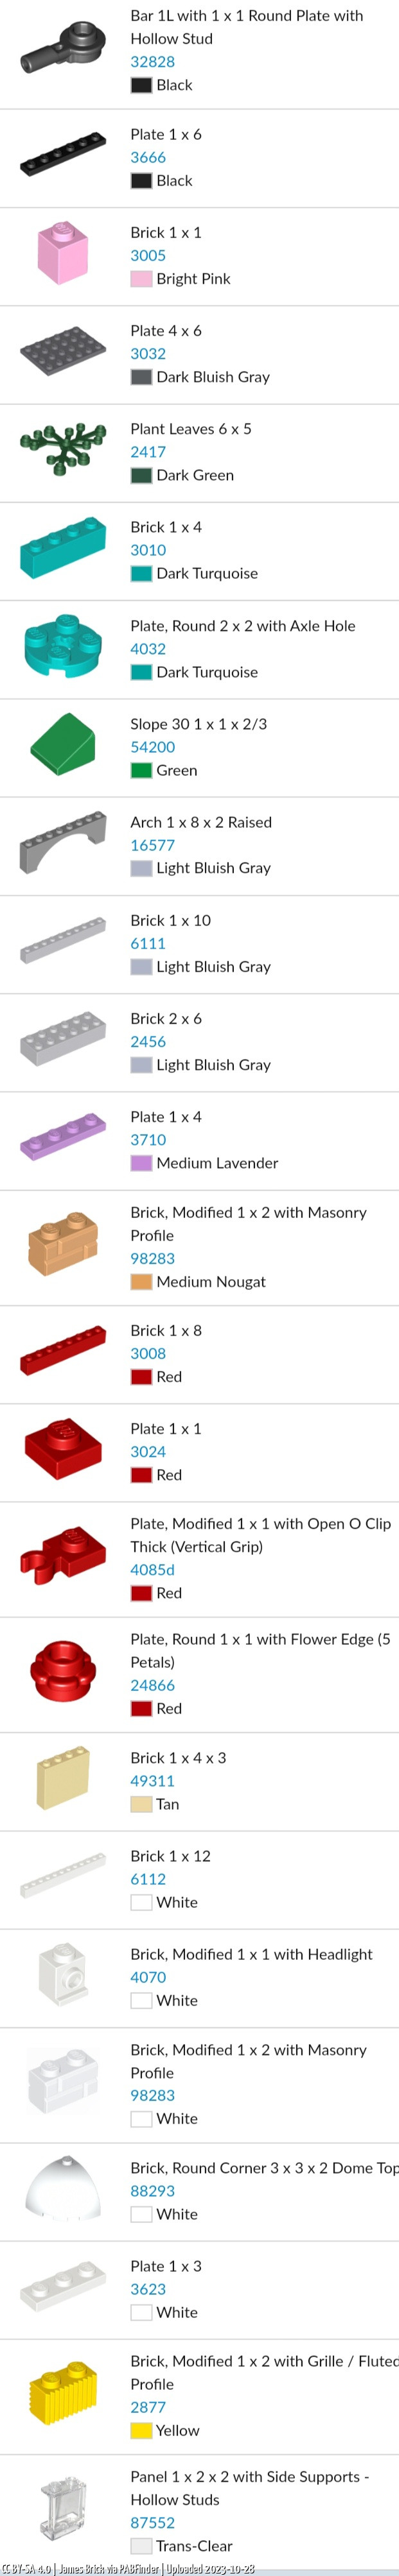 Pick a Brick Köln (James Brick, 10/28/23, 9:16:20 PM)